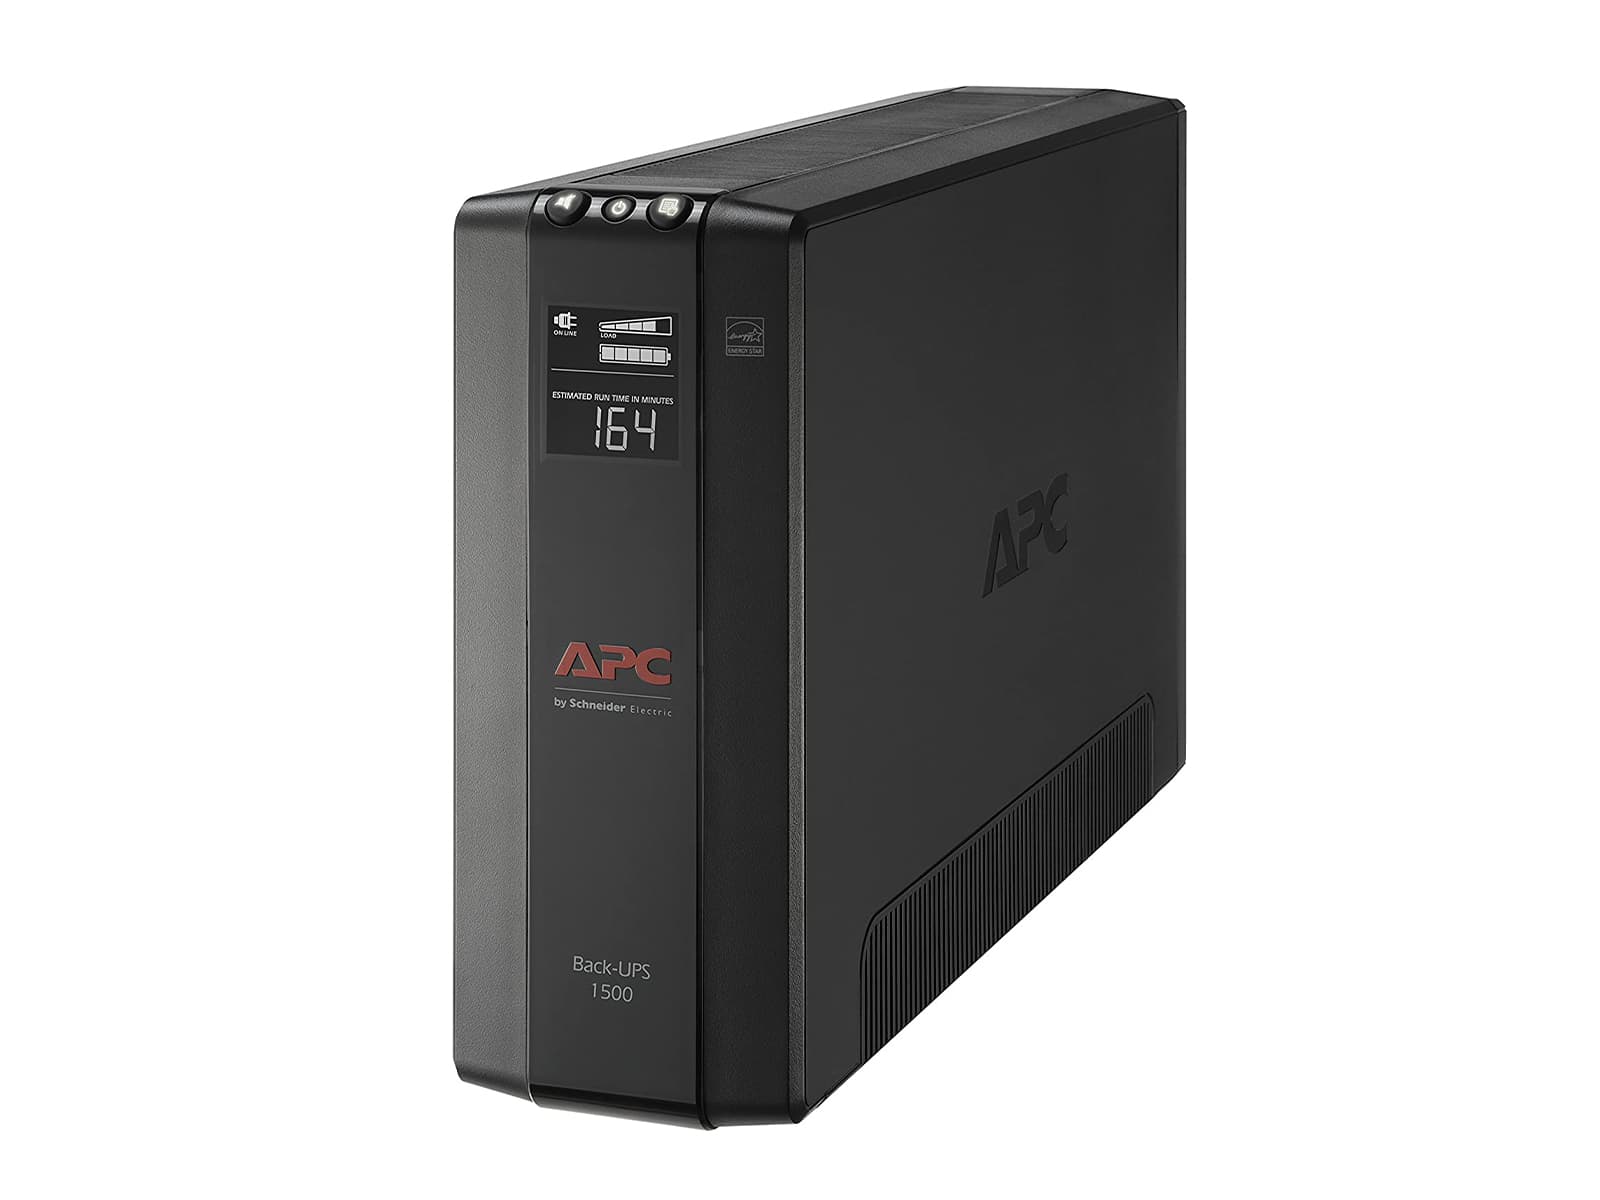 APC UPS, 1500VA UPS Battery Backup & Surge Protector with AVR, Back-UPS Pro Uninterruptible Power Supply (BX1500M) Monitors.com 